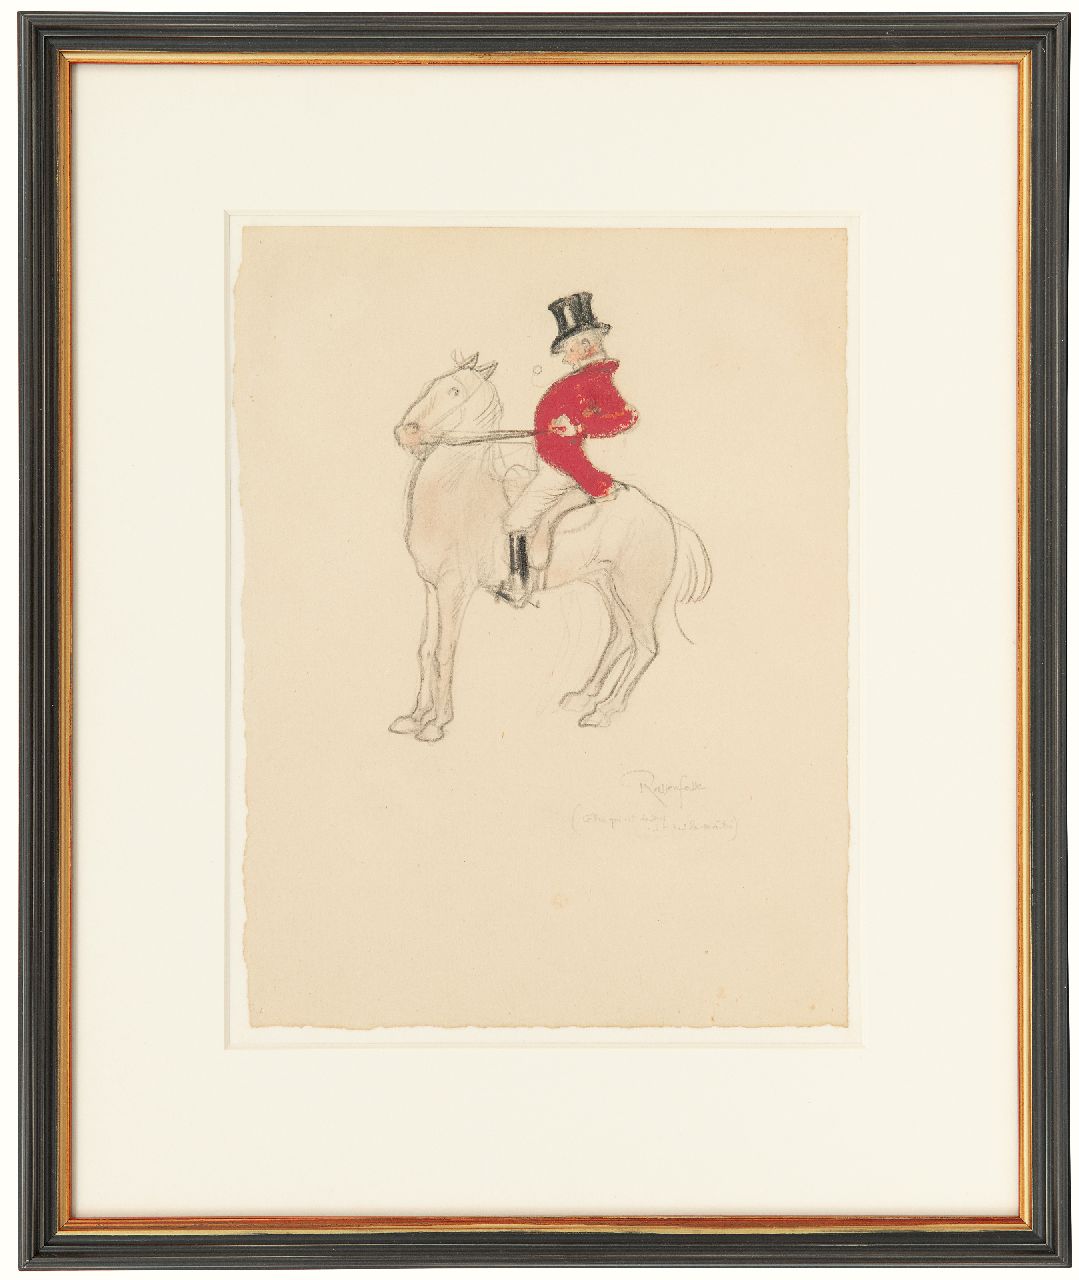 Rassenfosse A.L.  | André Louis 'Armand' Rassenfosse, Horse riding, pencil, chalk and watercolour on paper 25.3 x 19.0 cm, signed l.r.